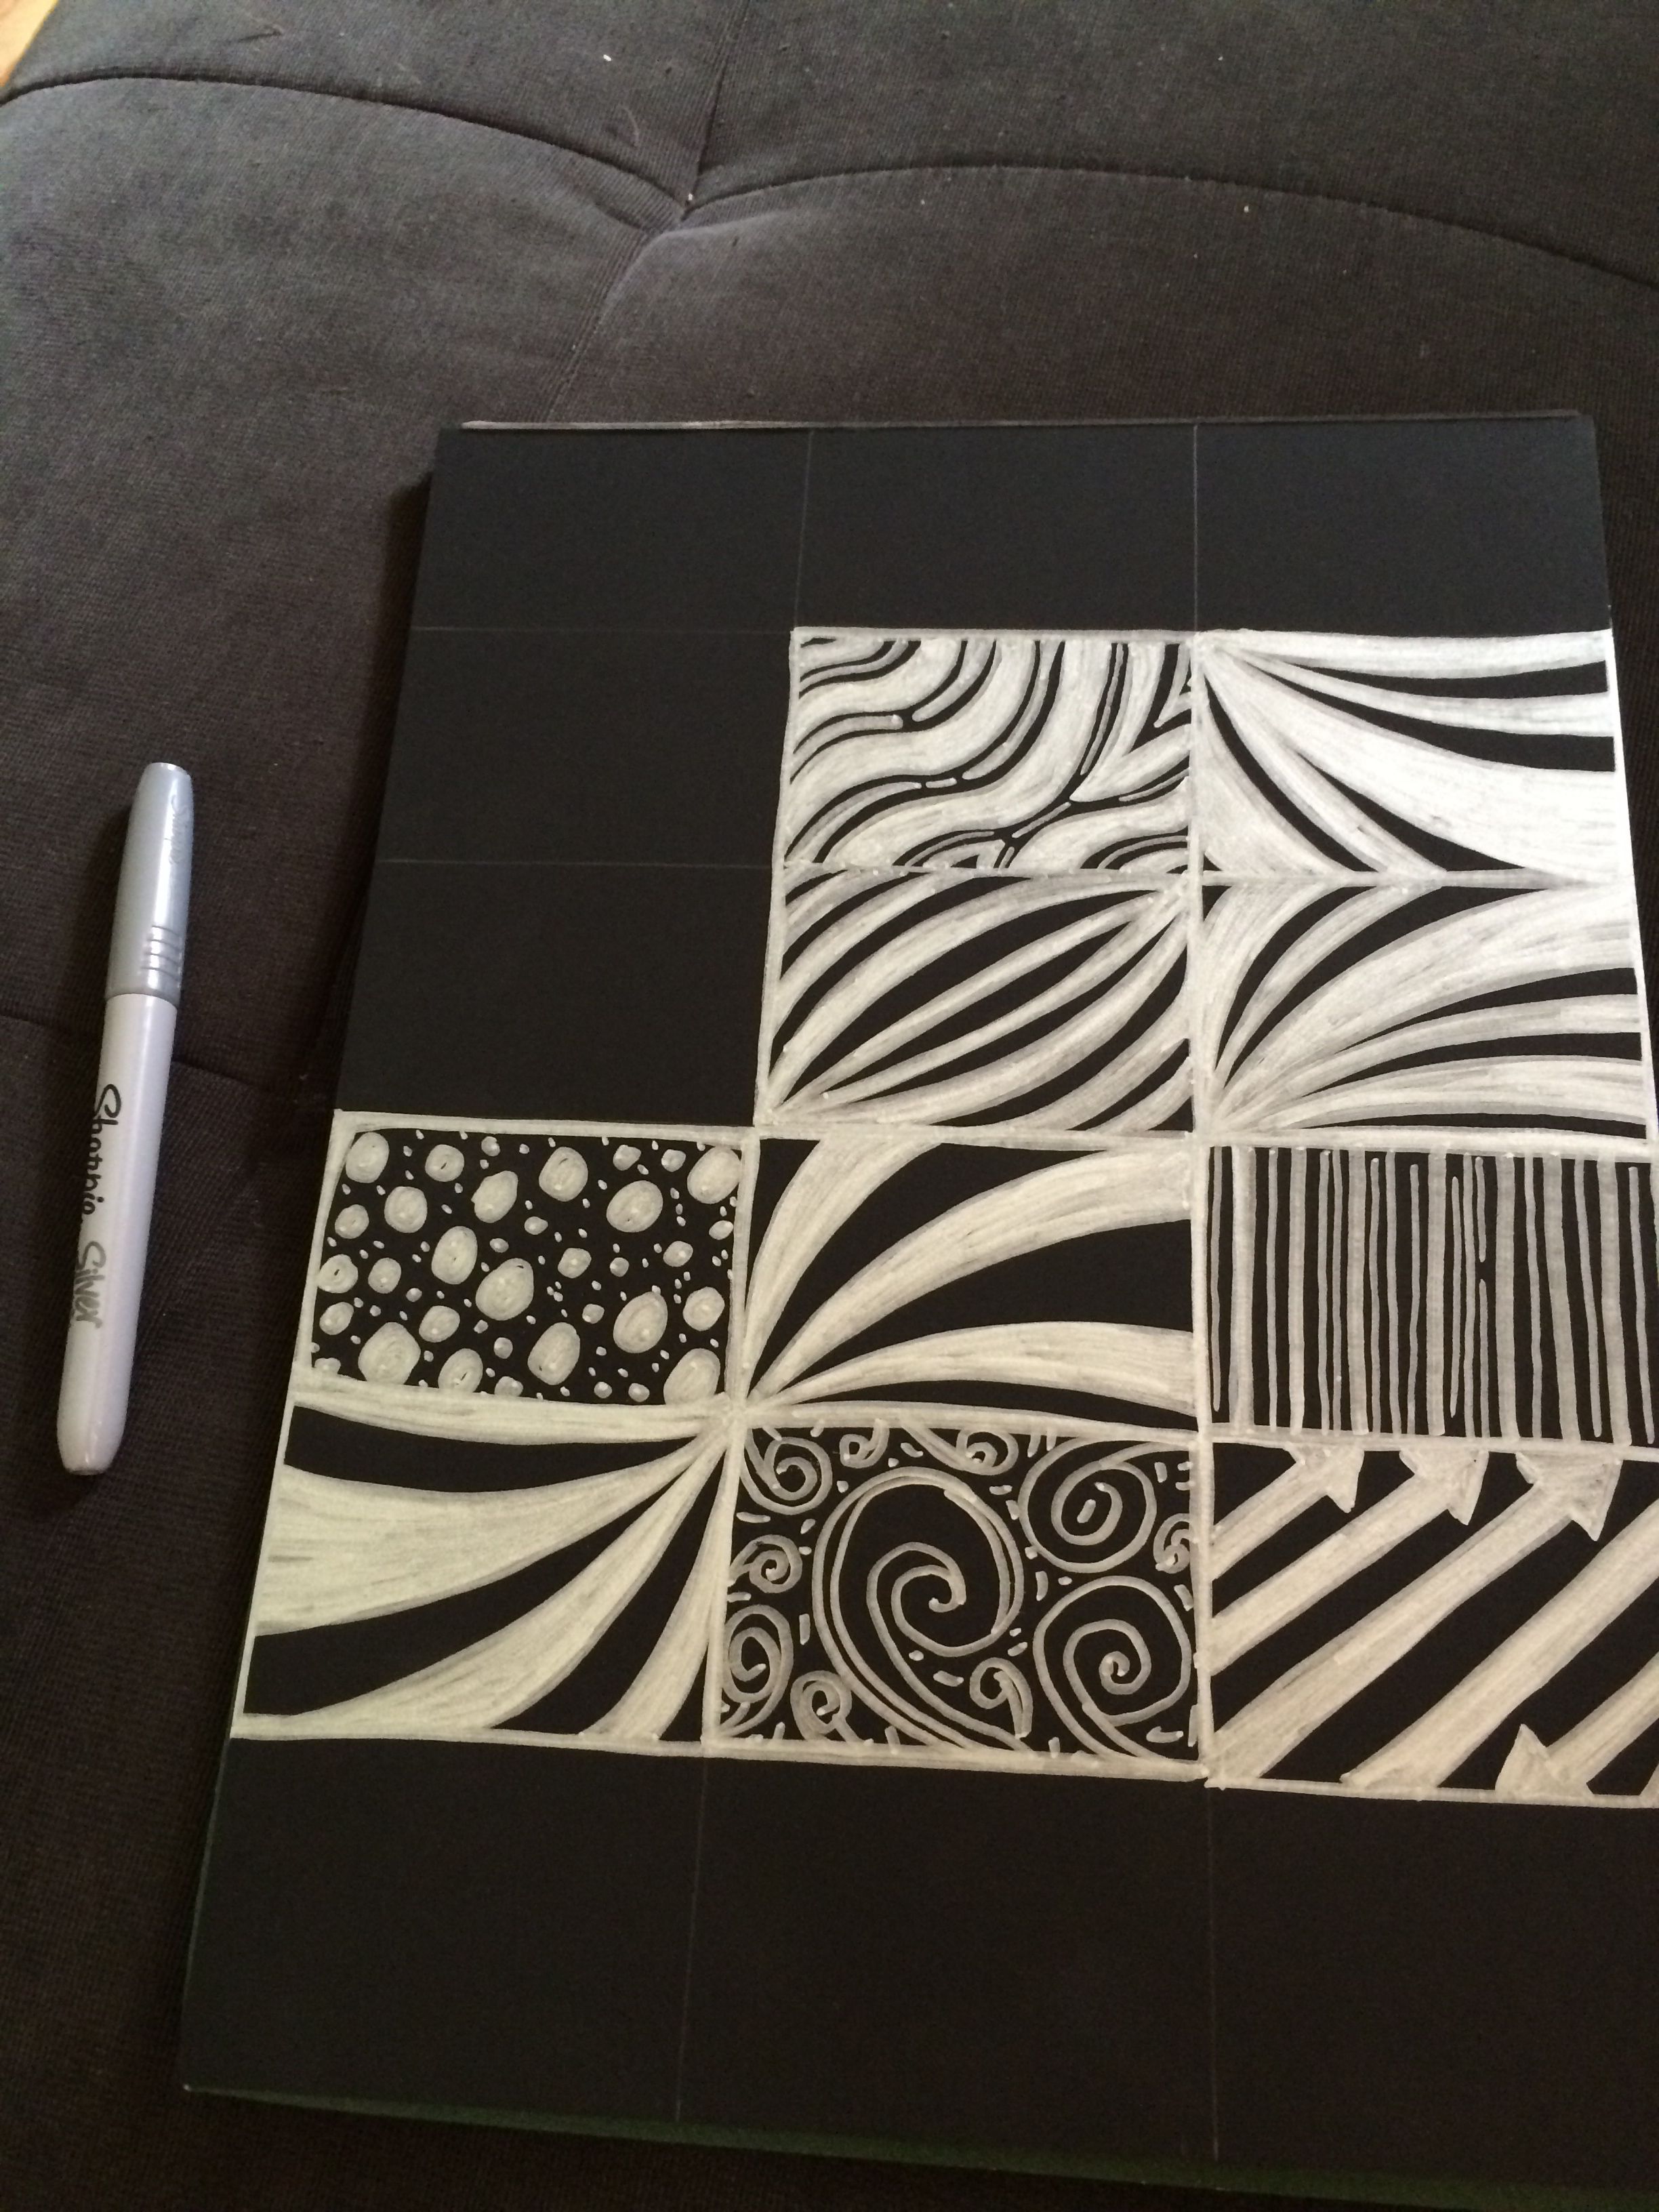 Silver sharpie on black paper | My Doodles | Pinterest | Black paper ...